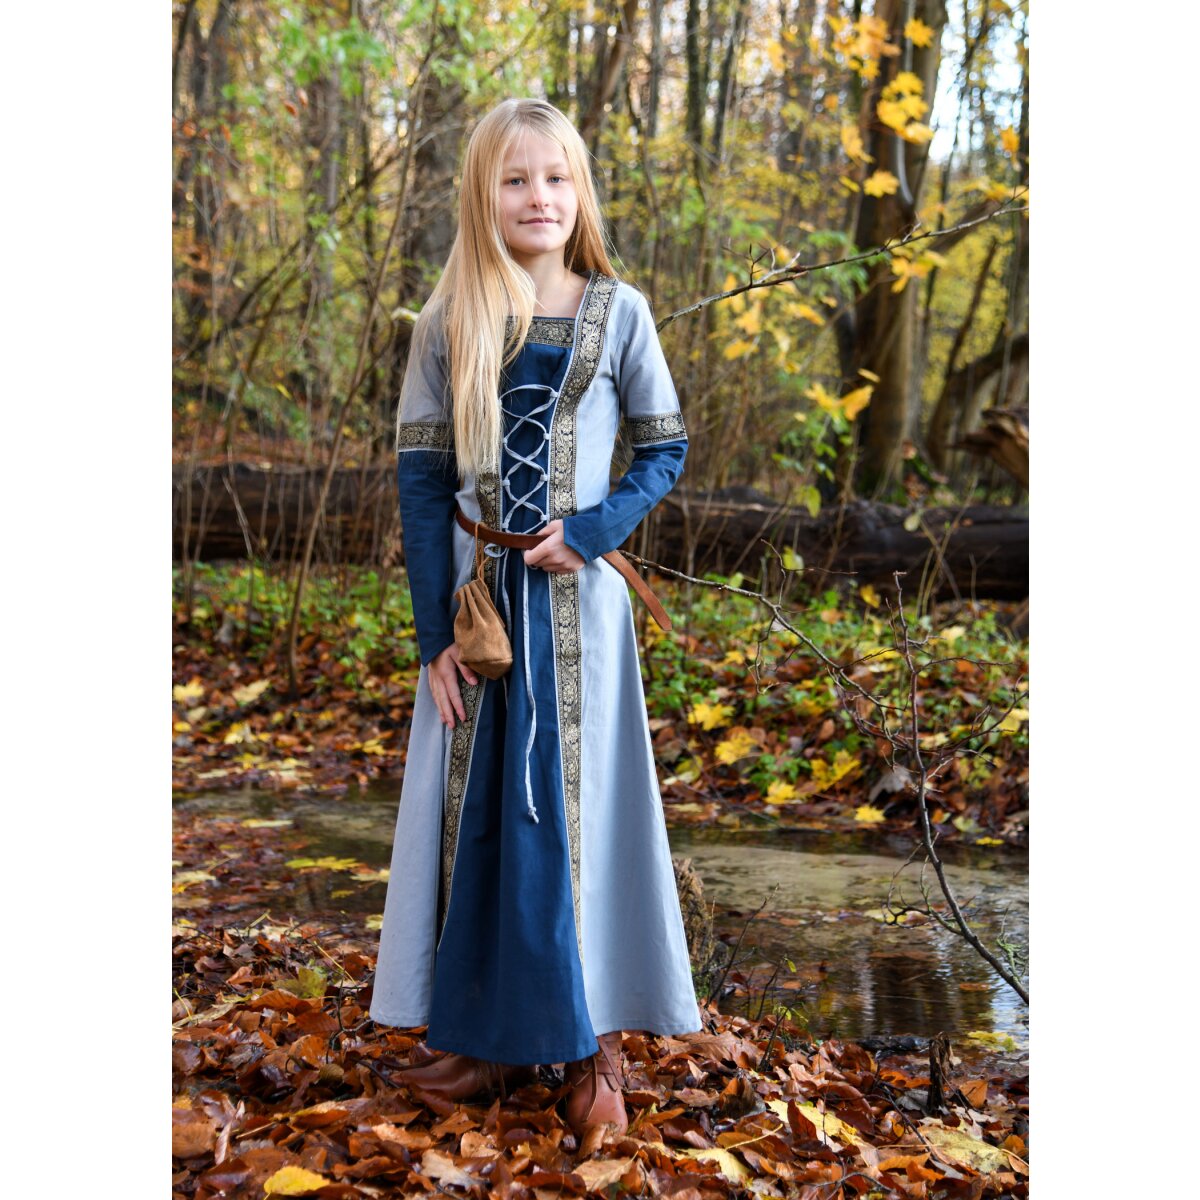 Childrens fantasy medieval dress blue, long sleeve...